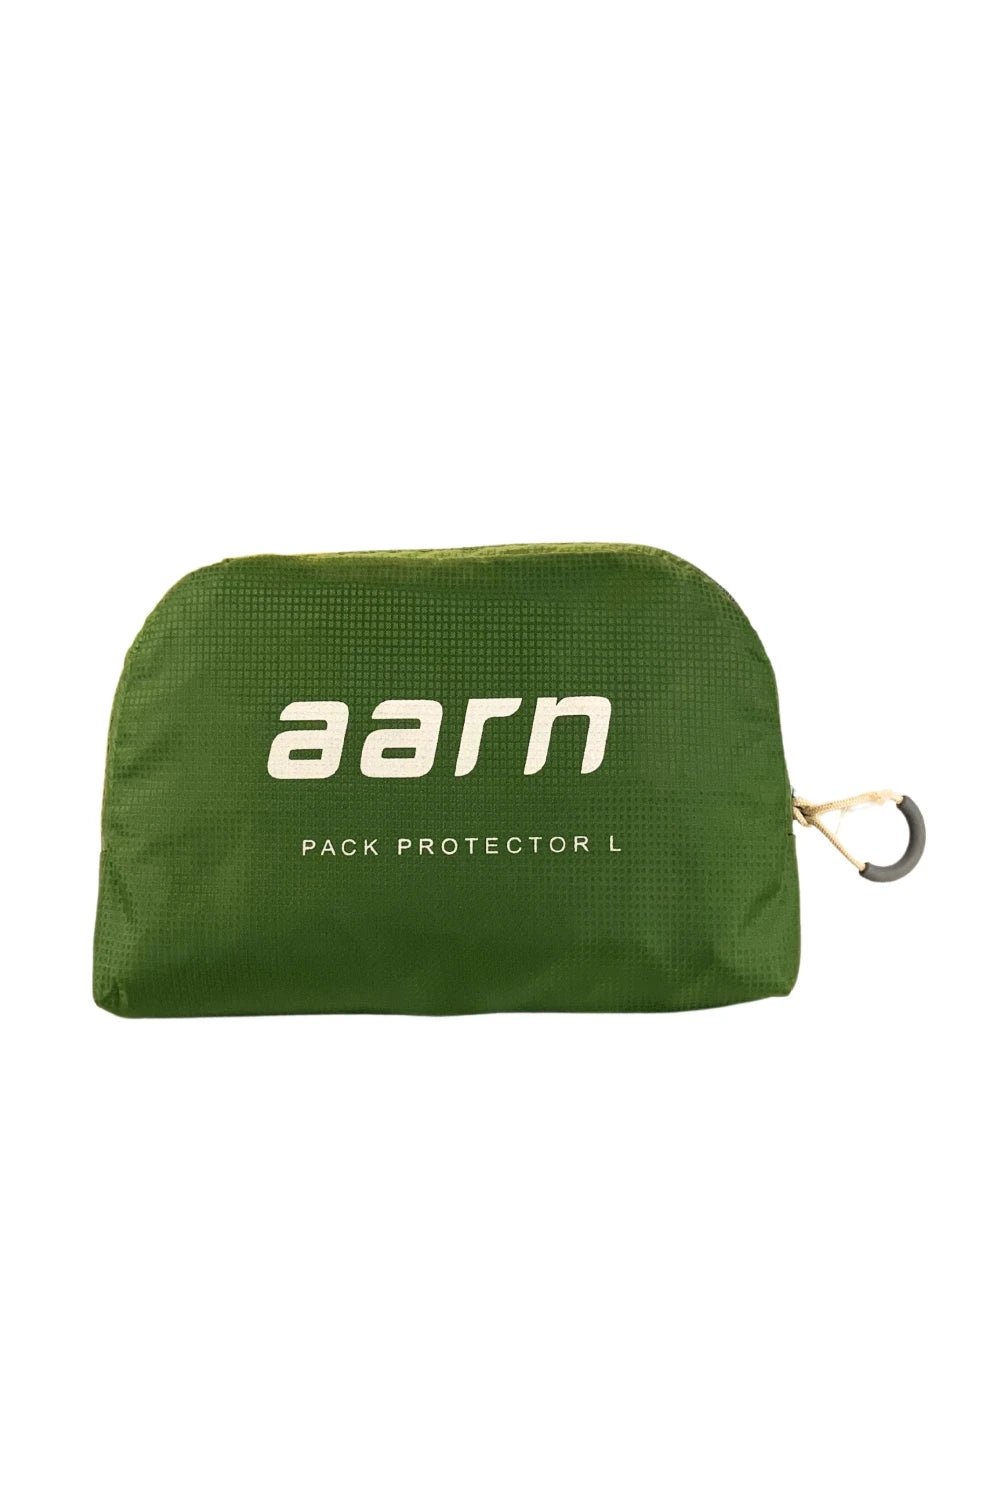 Aarn Pack Protector | Coffee Outdoors